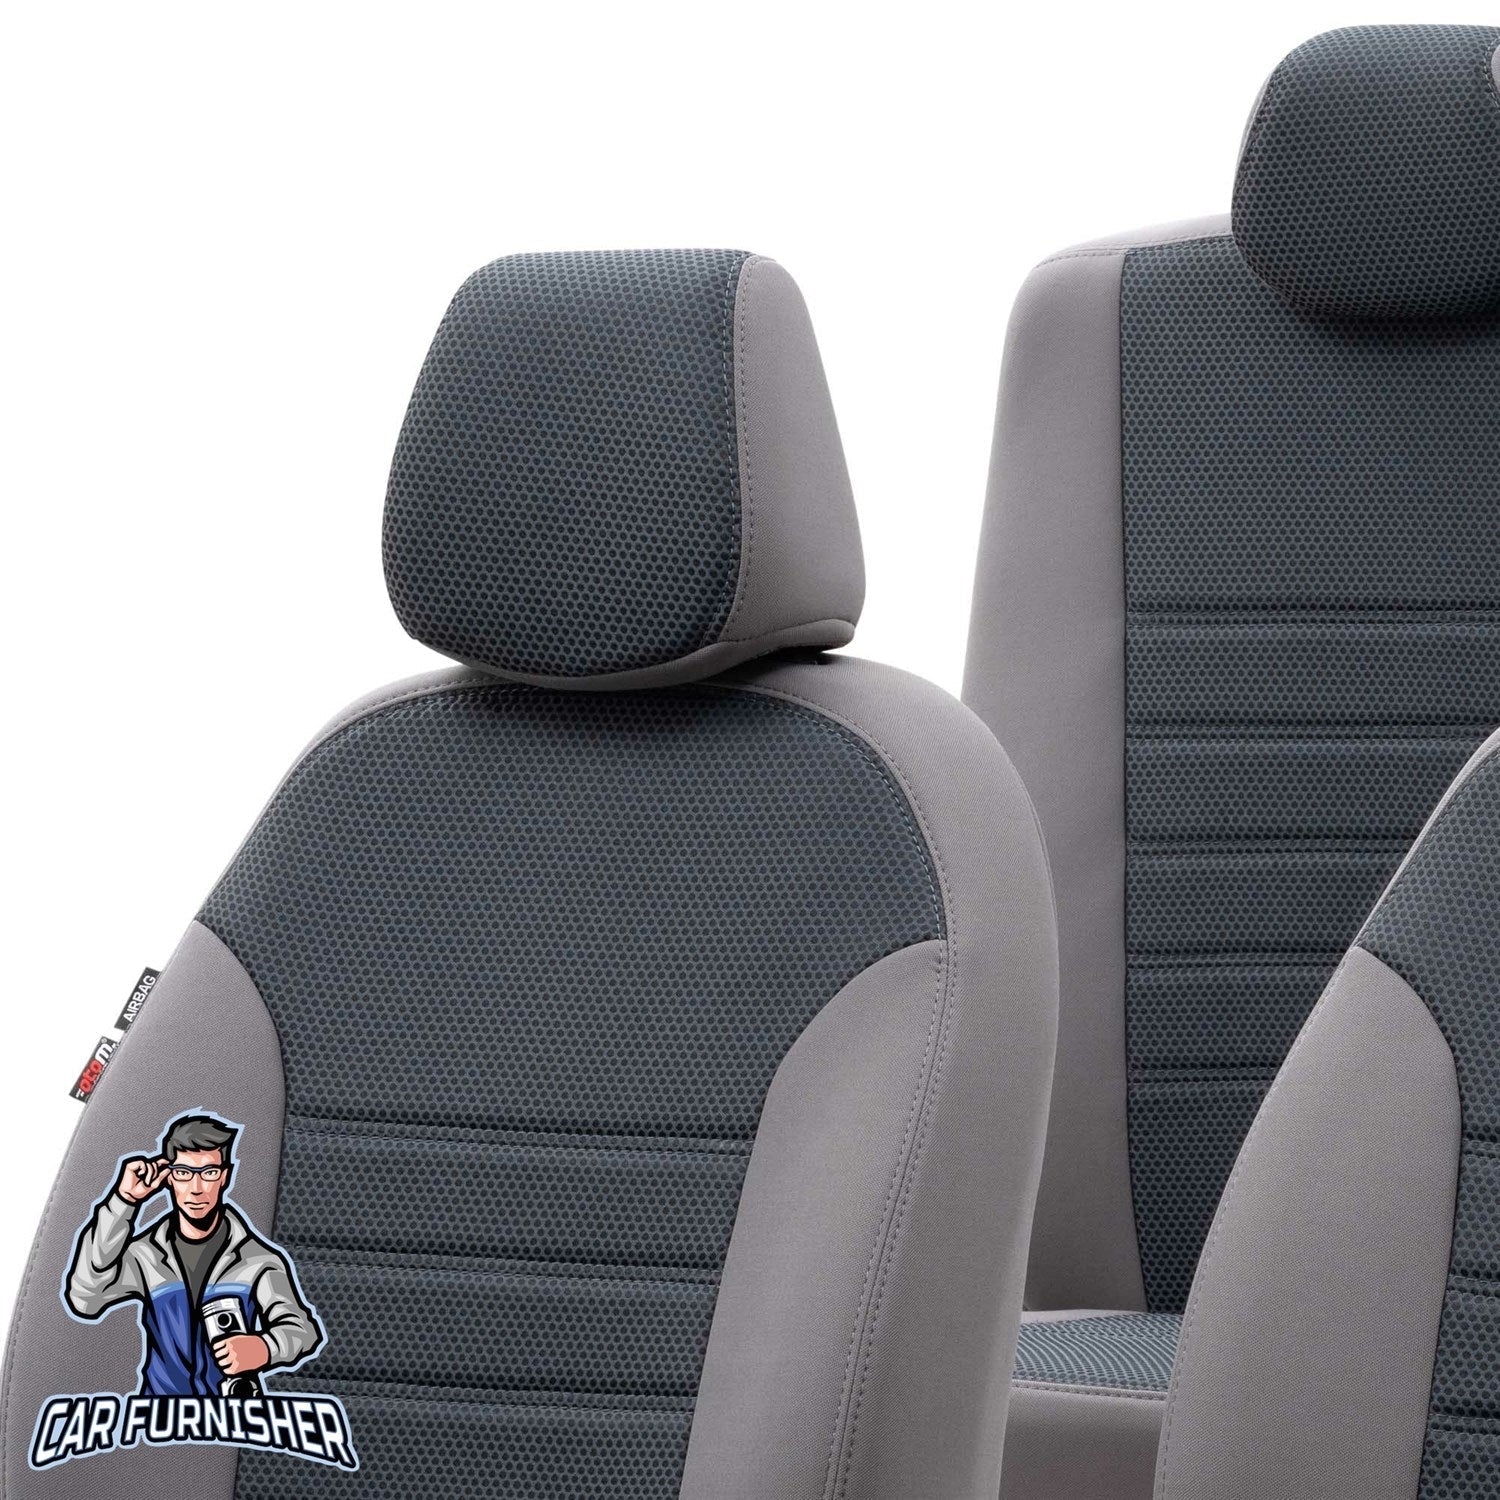 Smart ForFour Seat Covers Original Jacquard Design Smoked Jacquard Fabric